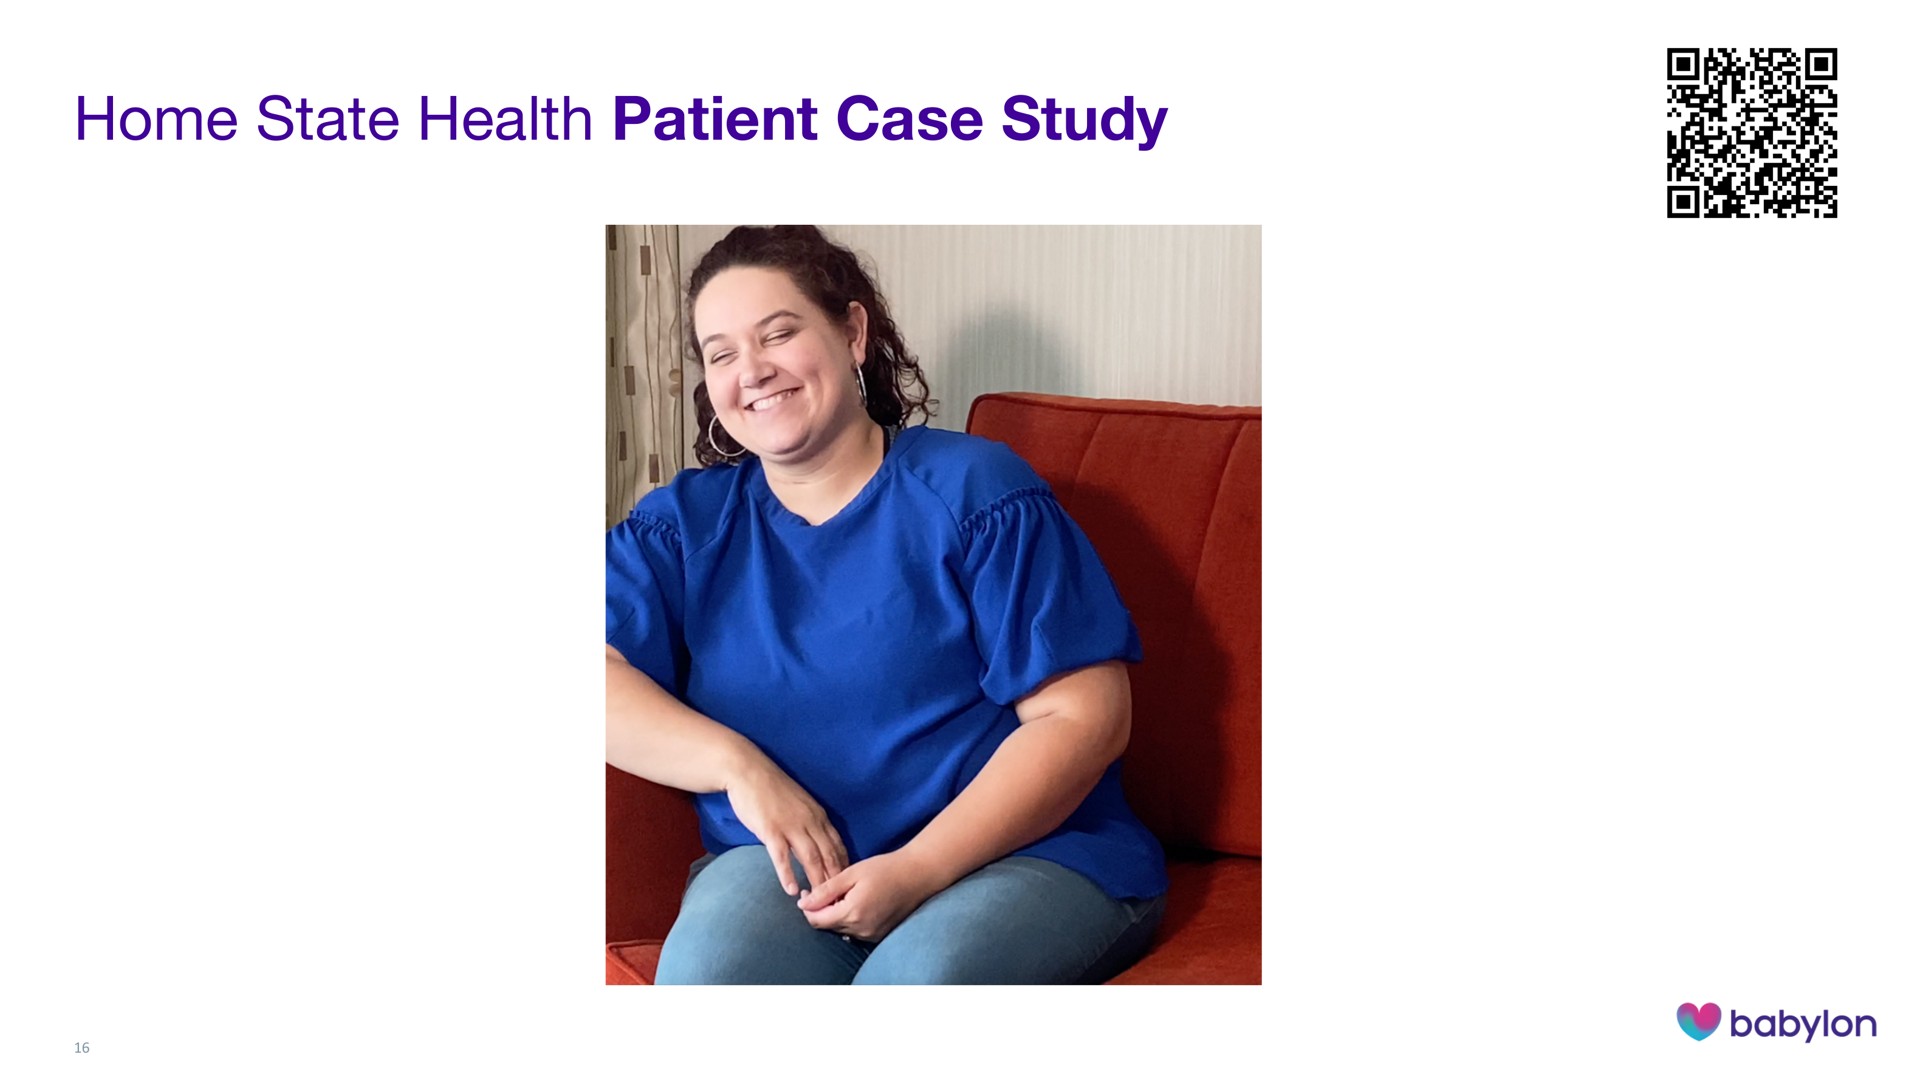 home state health patient case study | Babylon